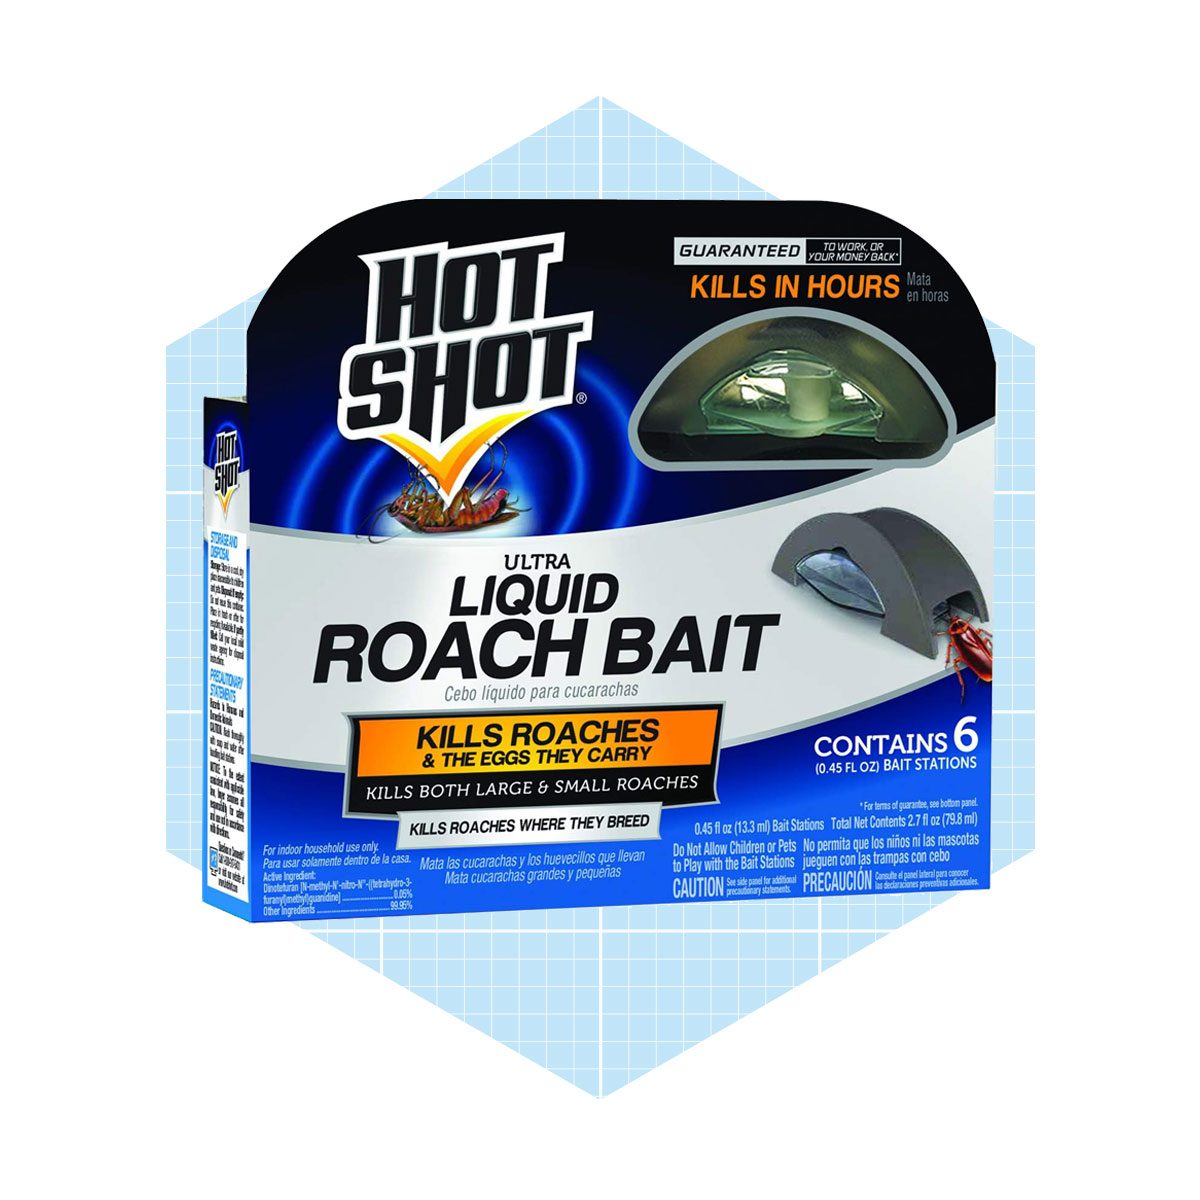 Hot Shot Liquid Roach Bait Ecomm Via Amazon